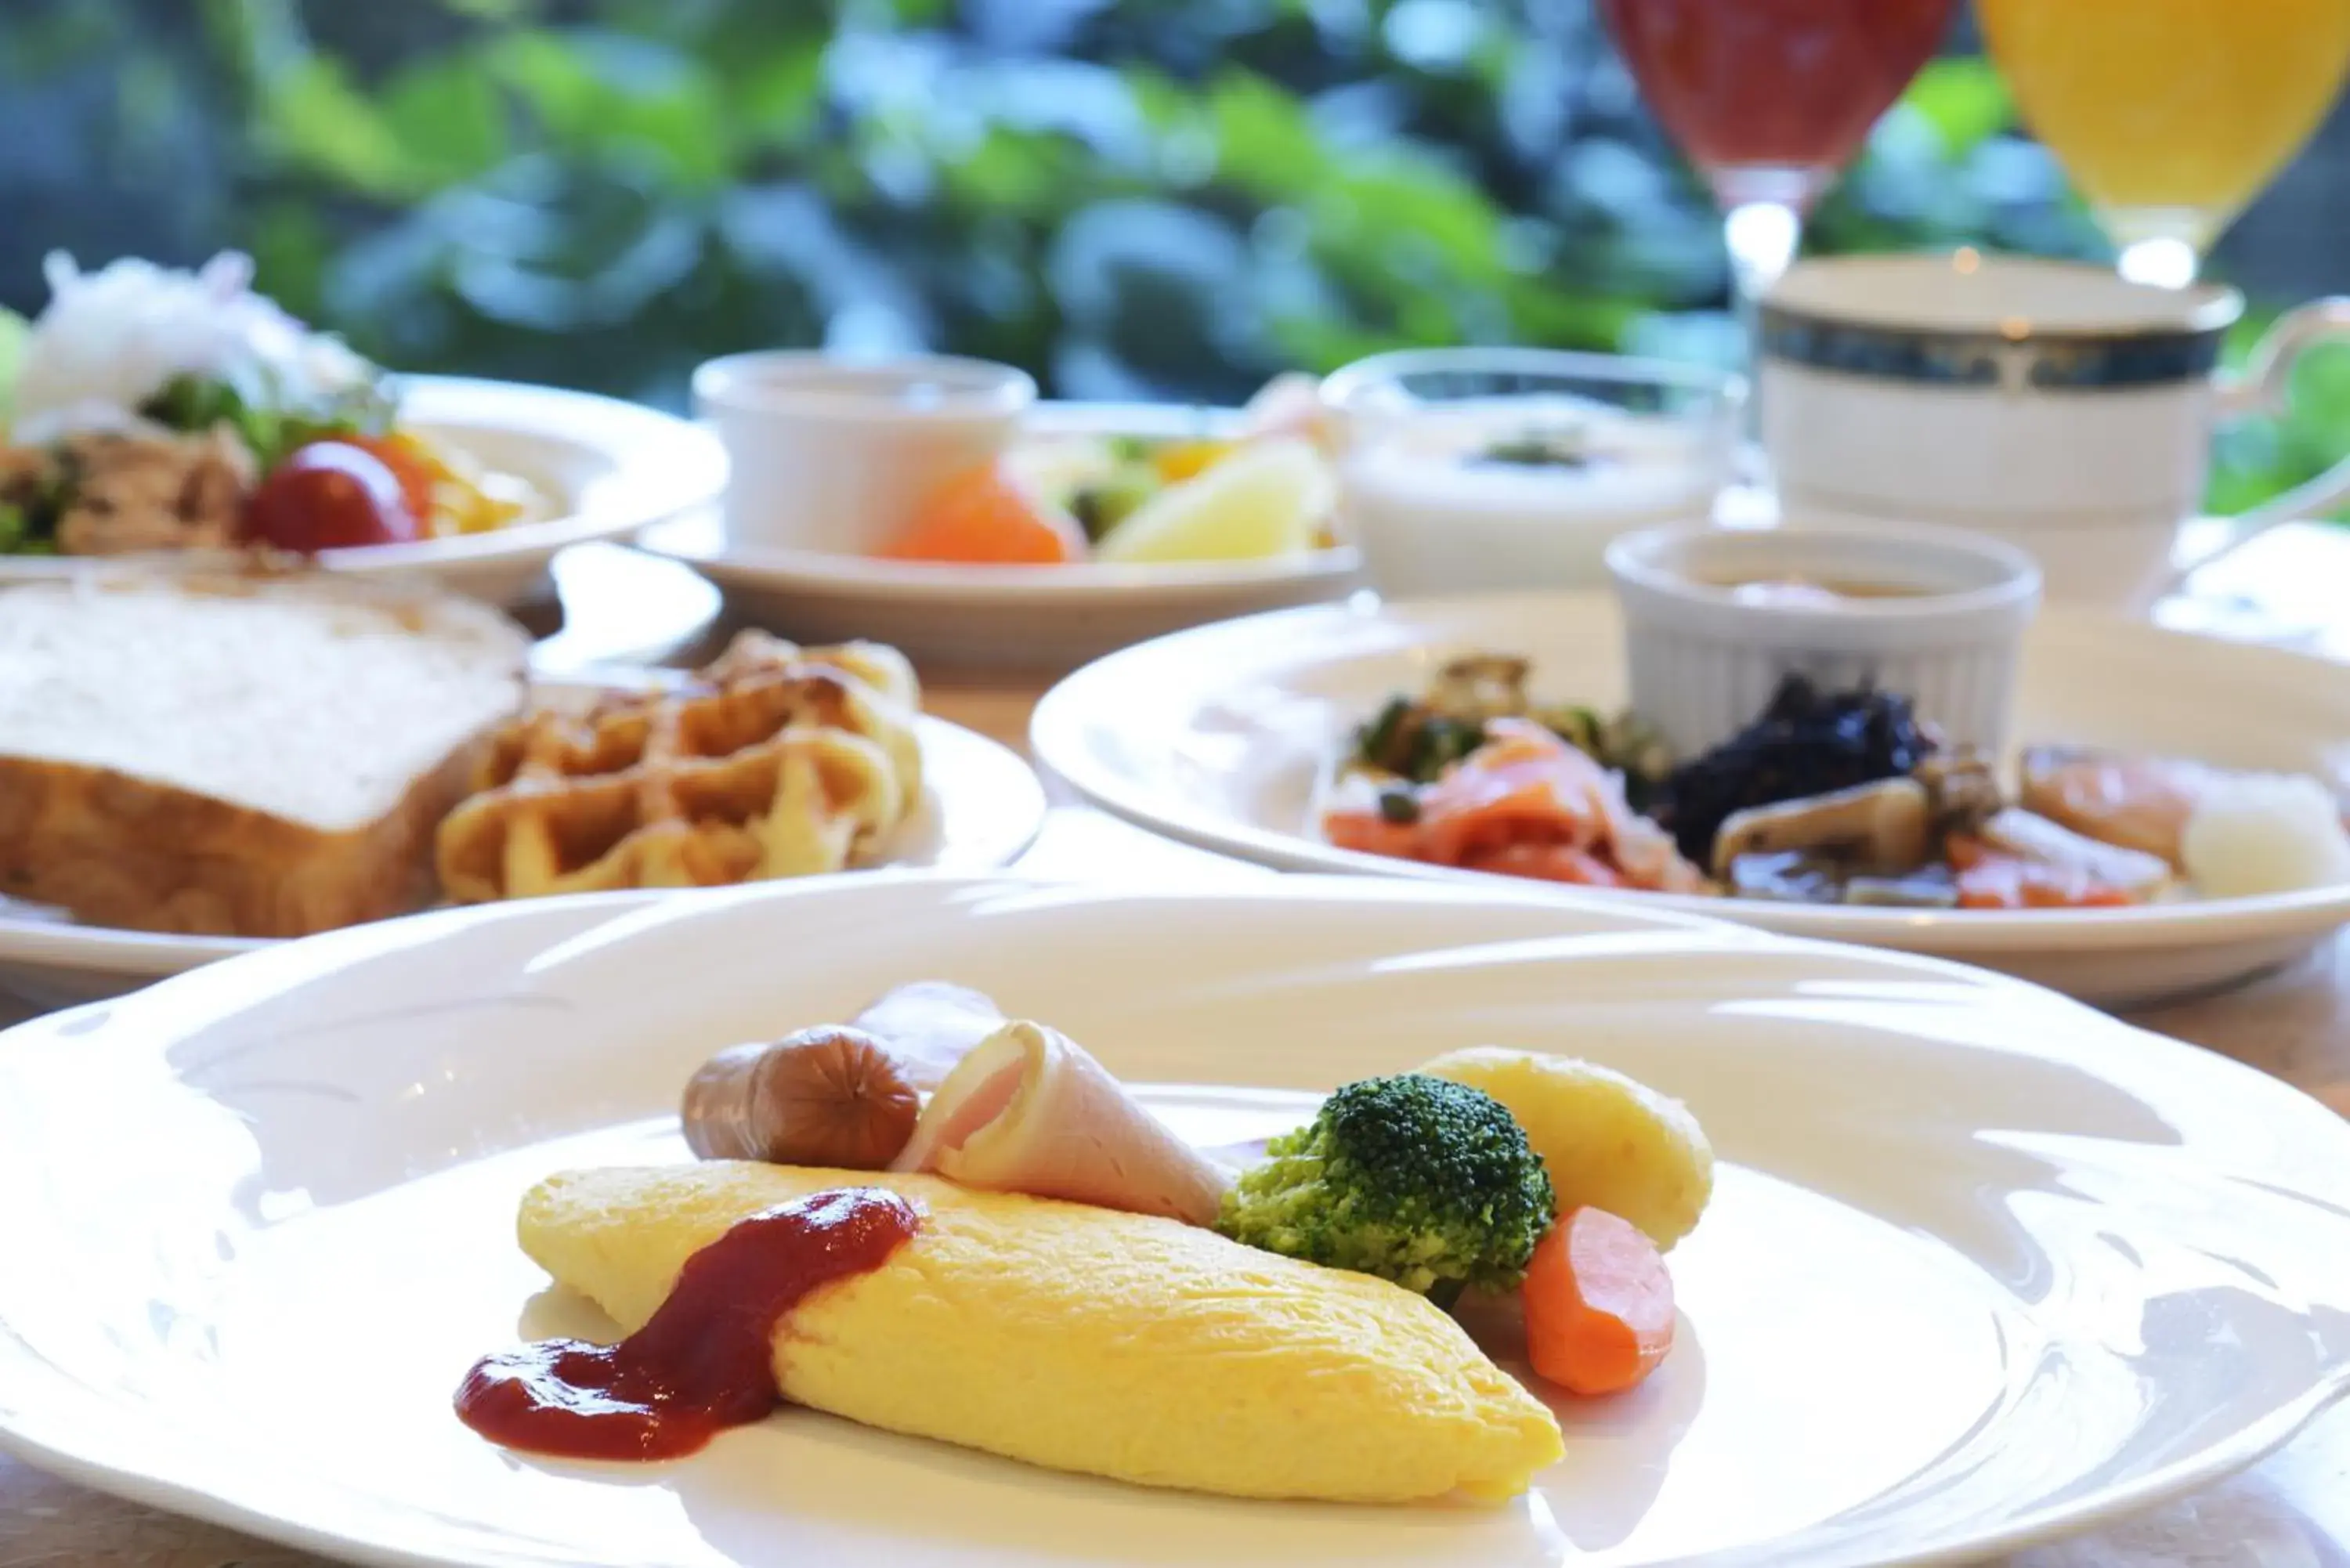 Food in Rihga Royal Hotel Hiroshima